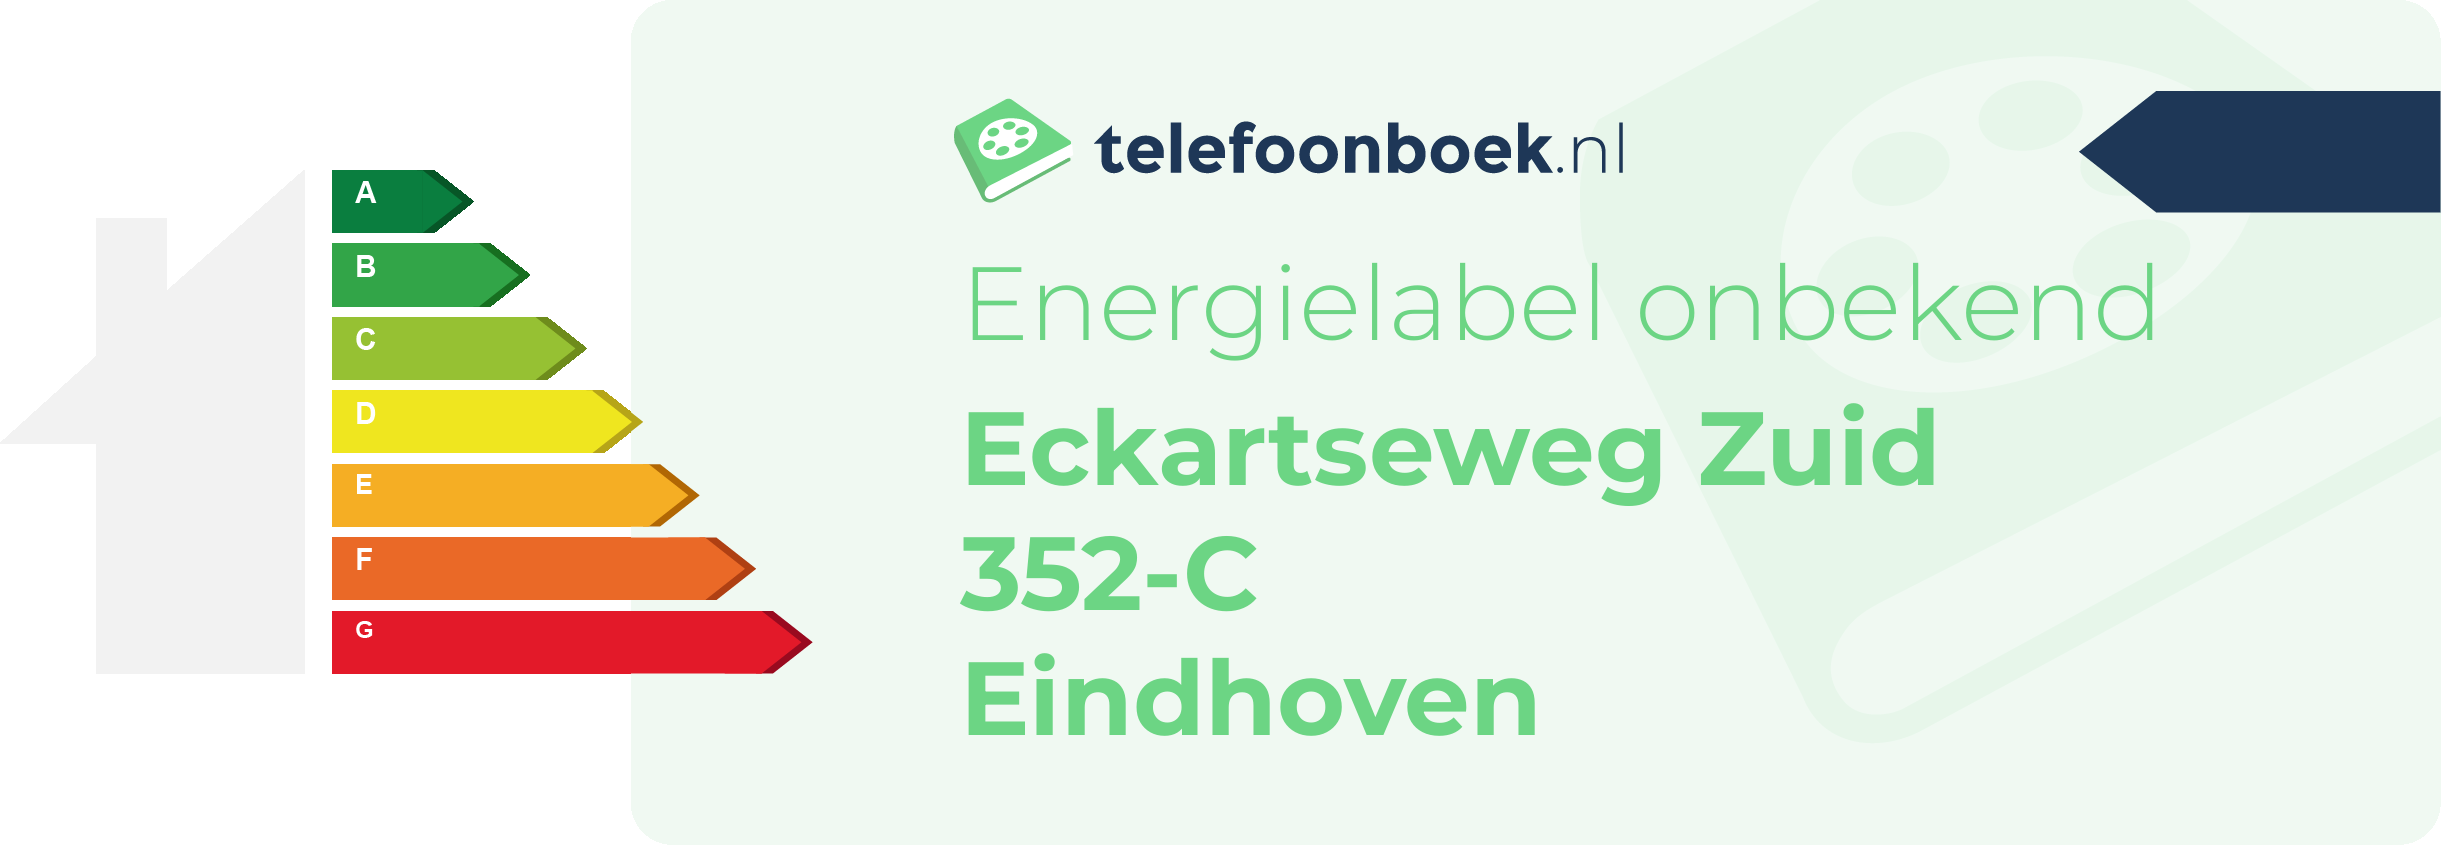 Energielabel Eckartseweg Zuid 352-C Eindhoven